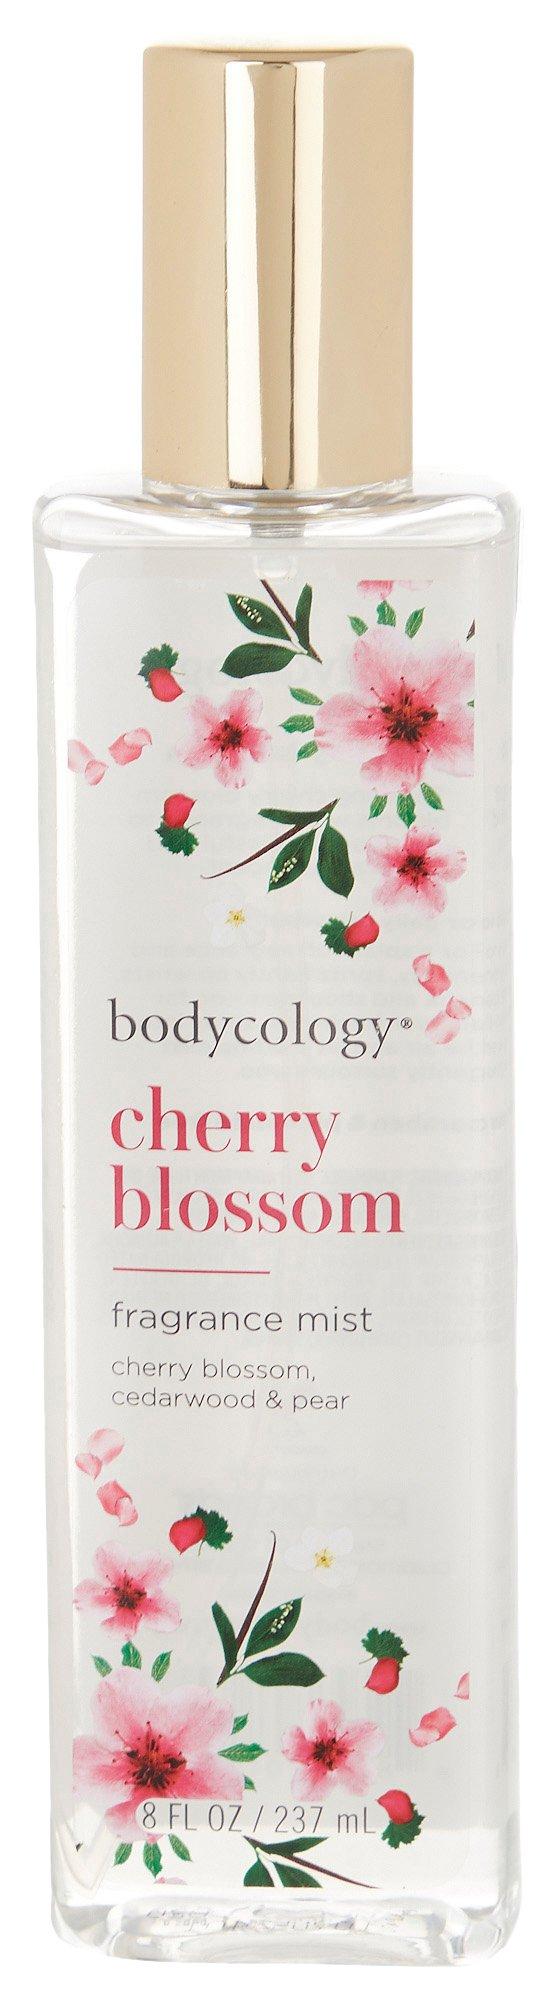 Bodycology Cherry Blossom Fragrance Mist 8 oz.